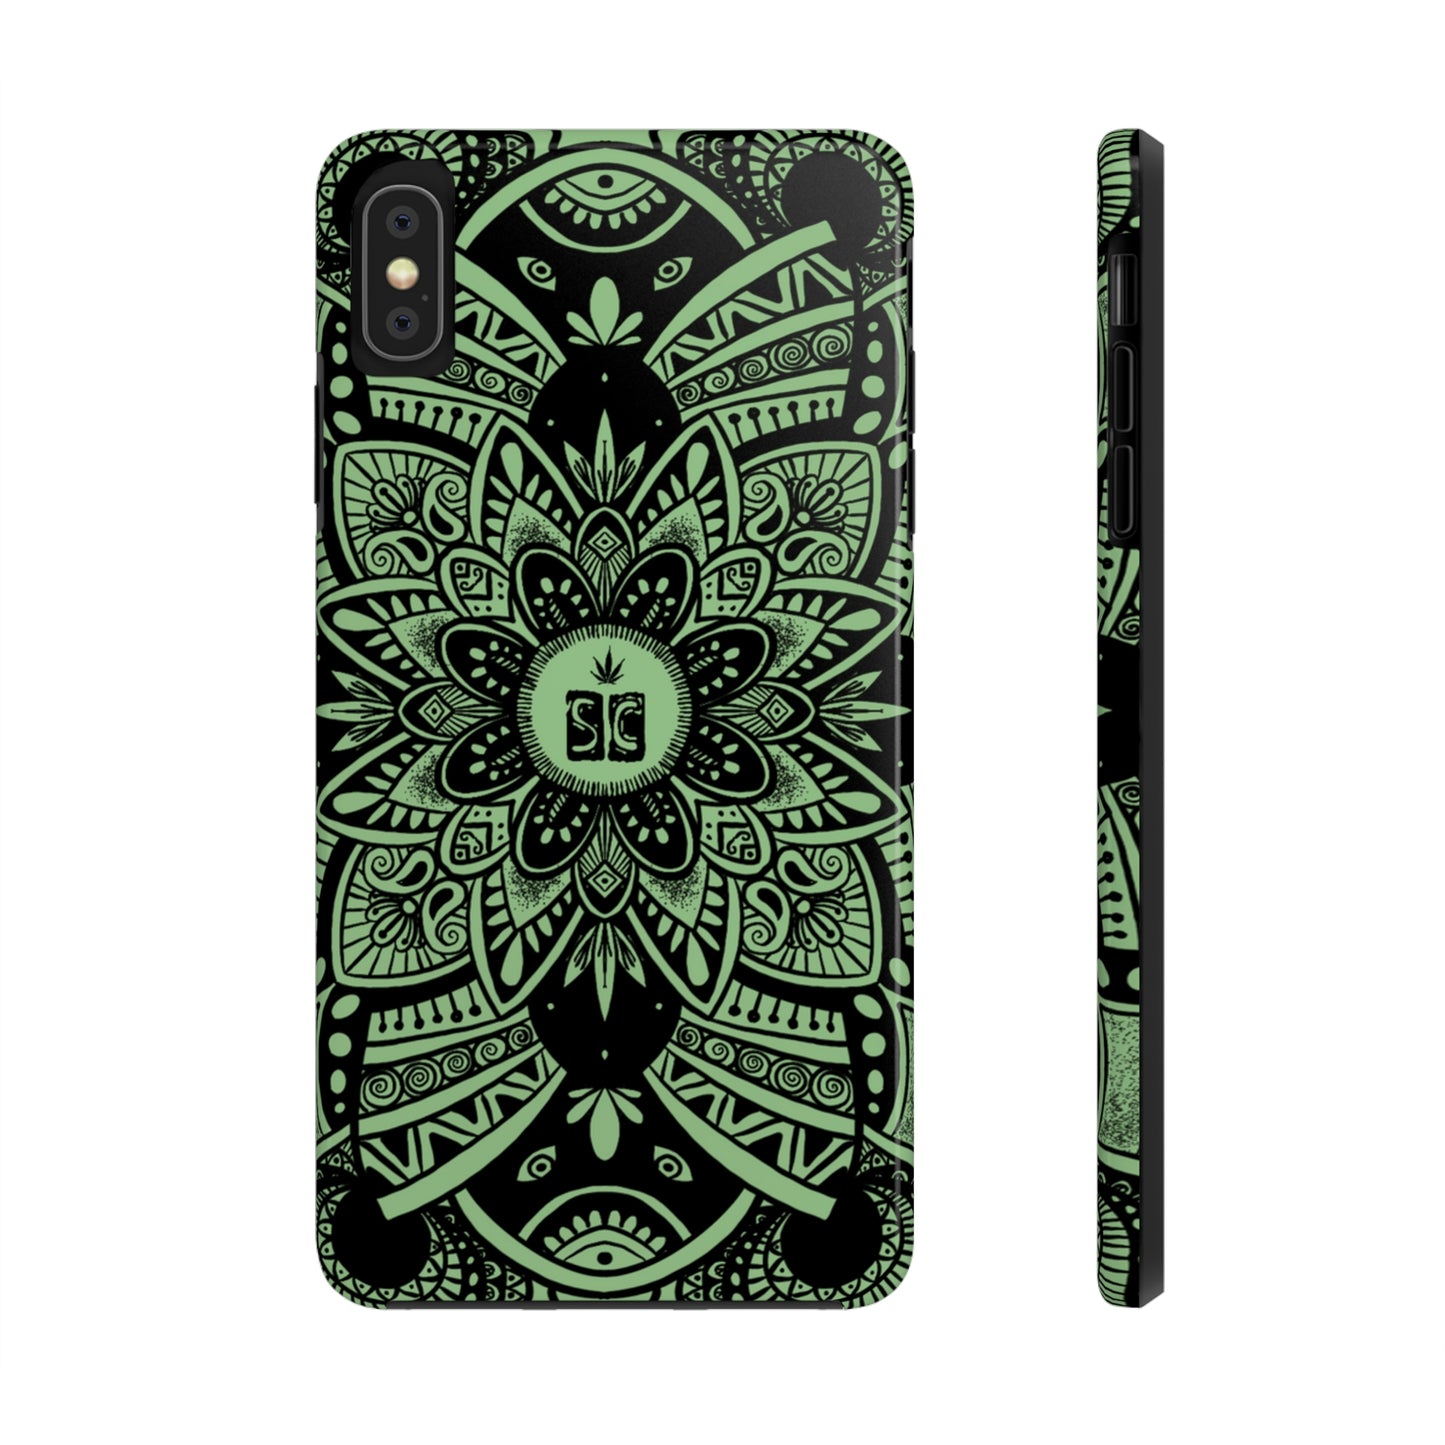 Shmackedala Phone Case - Black & Green